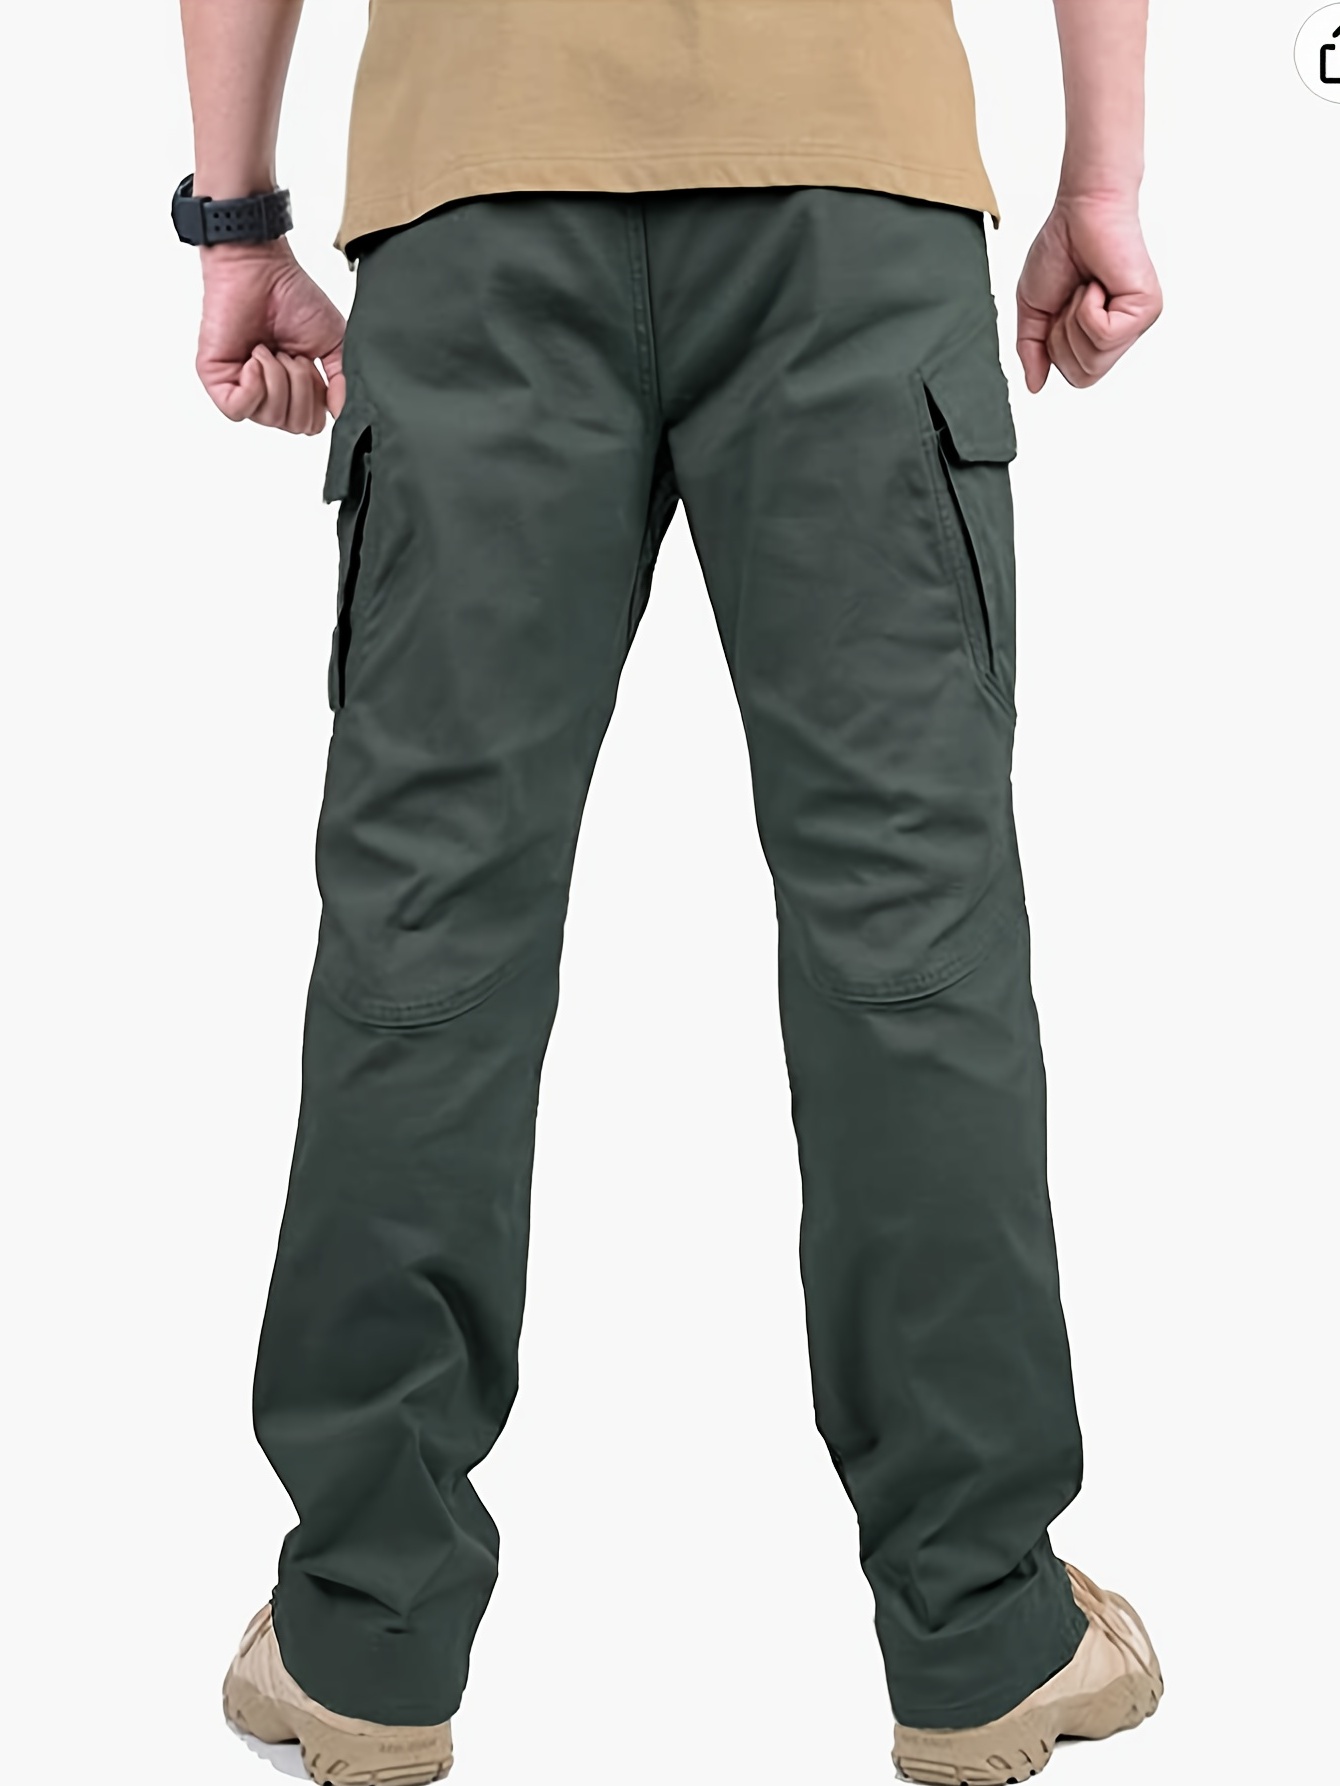 Cargo/ Combat Pant Joggers With Zipper - Green